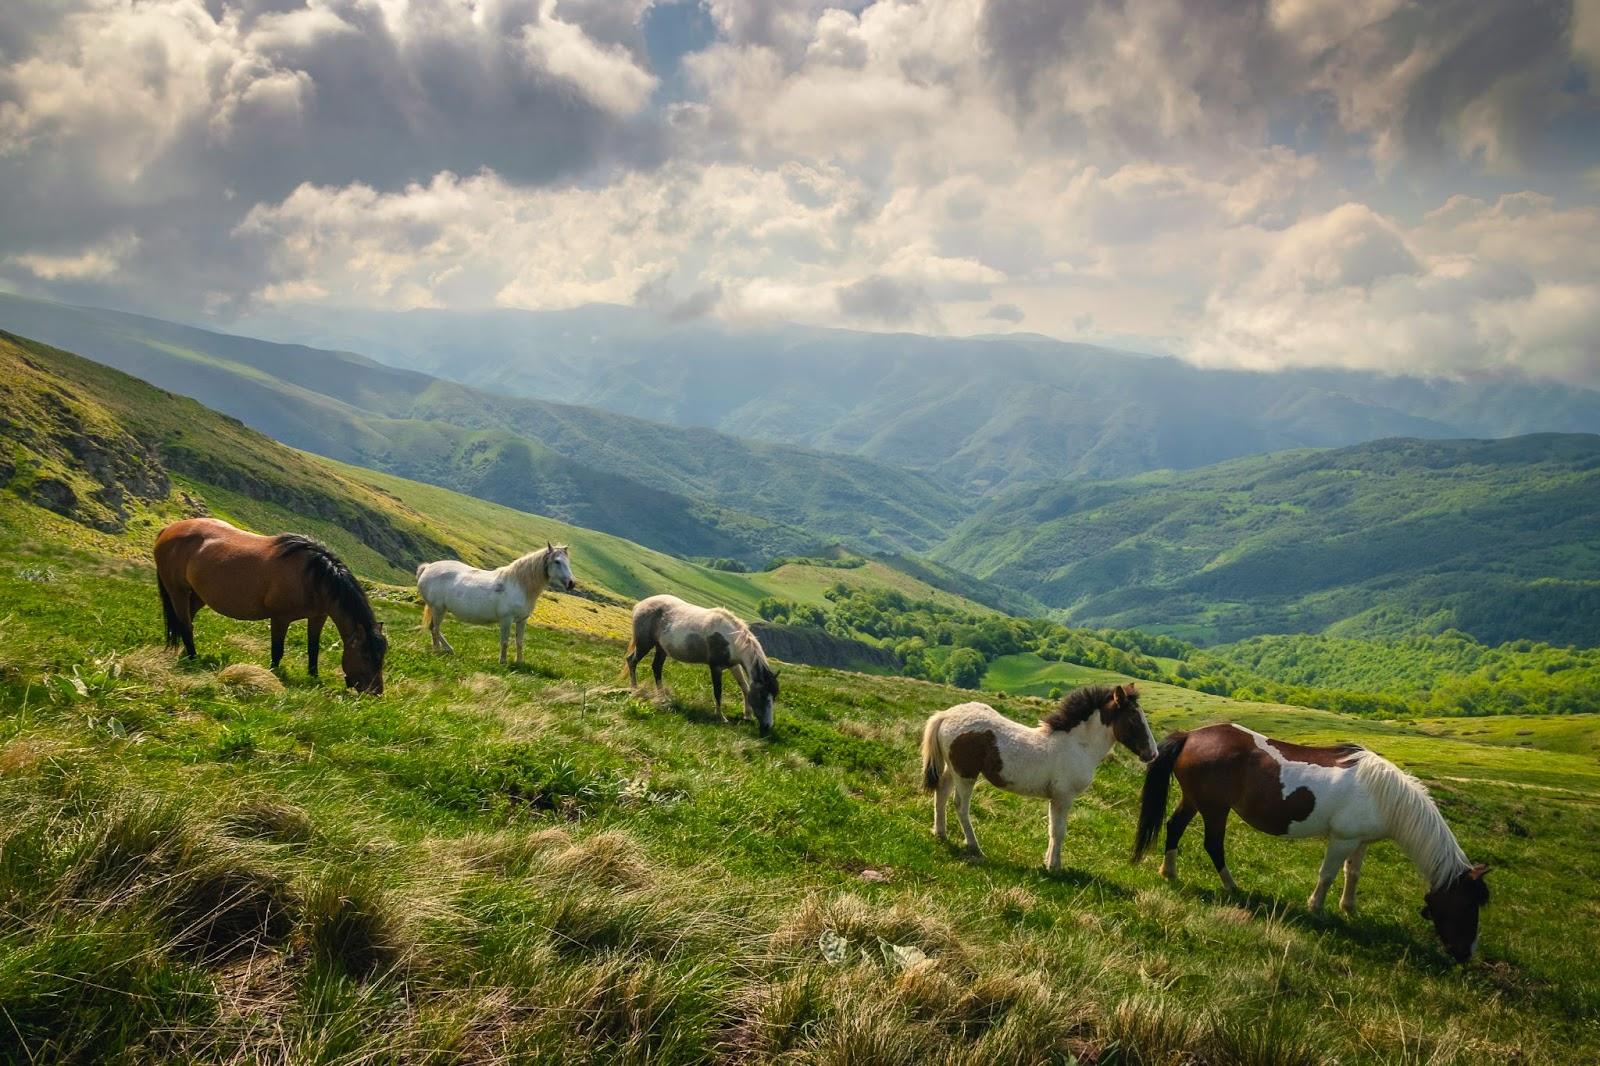 Landscape with Wild Horses Feeding in Mountain Meadow. Beautiful scene on Stara Planina Mountain in Serbia.